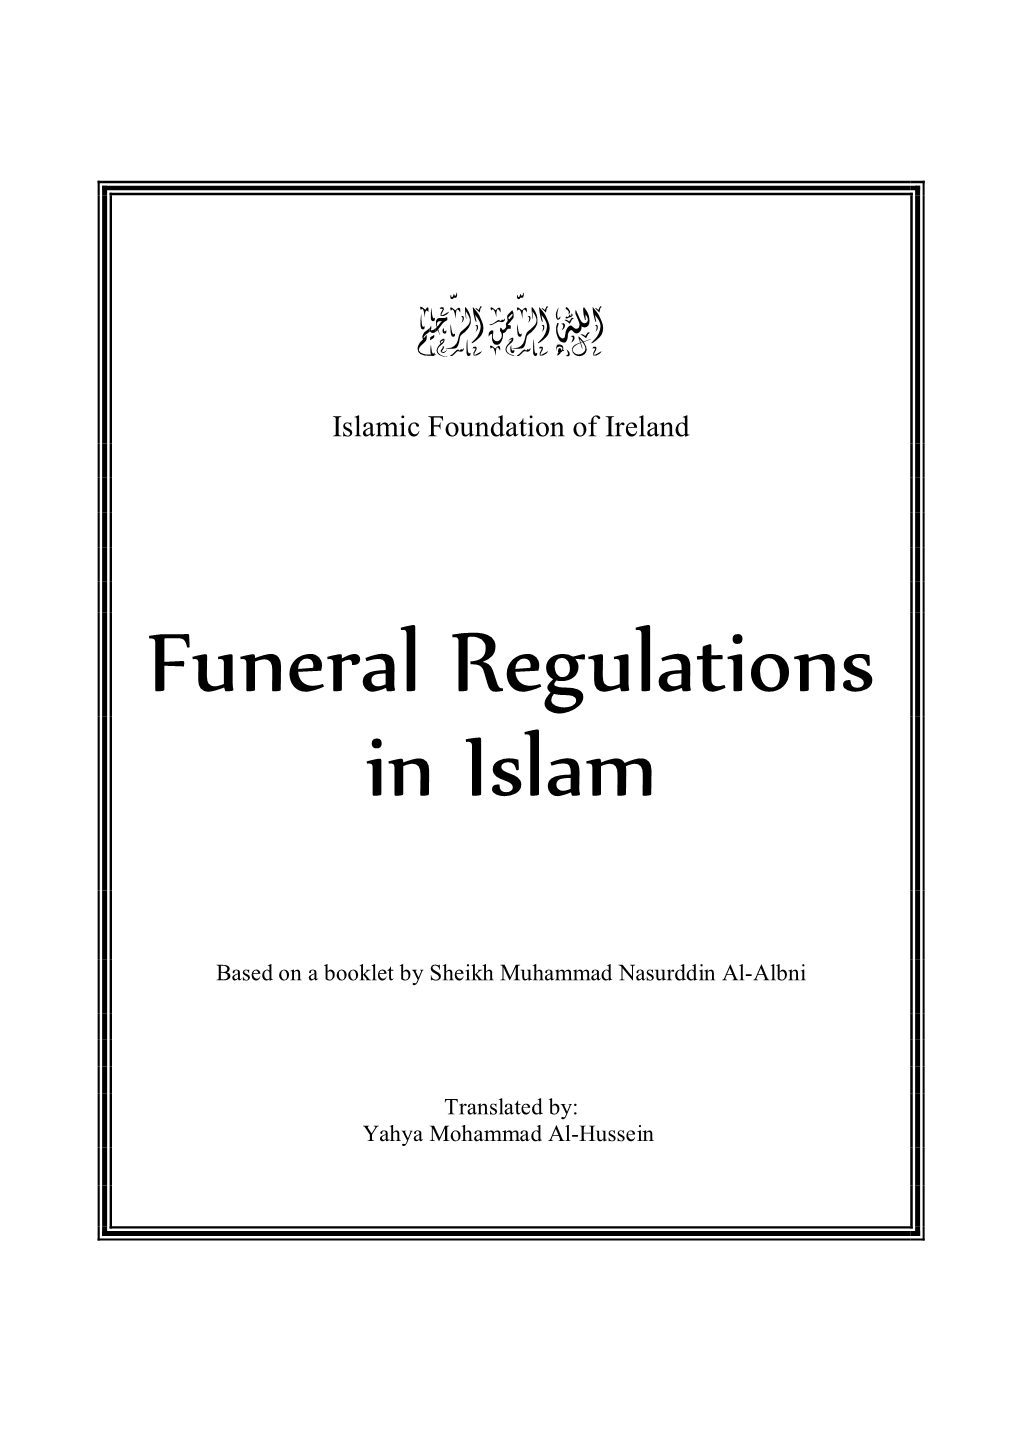 Funeral Regulations in Islam